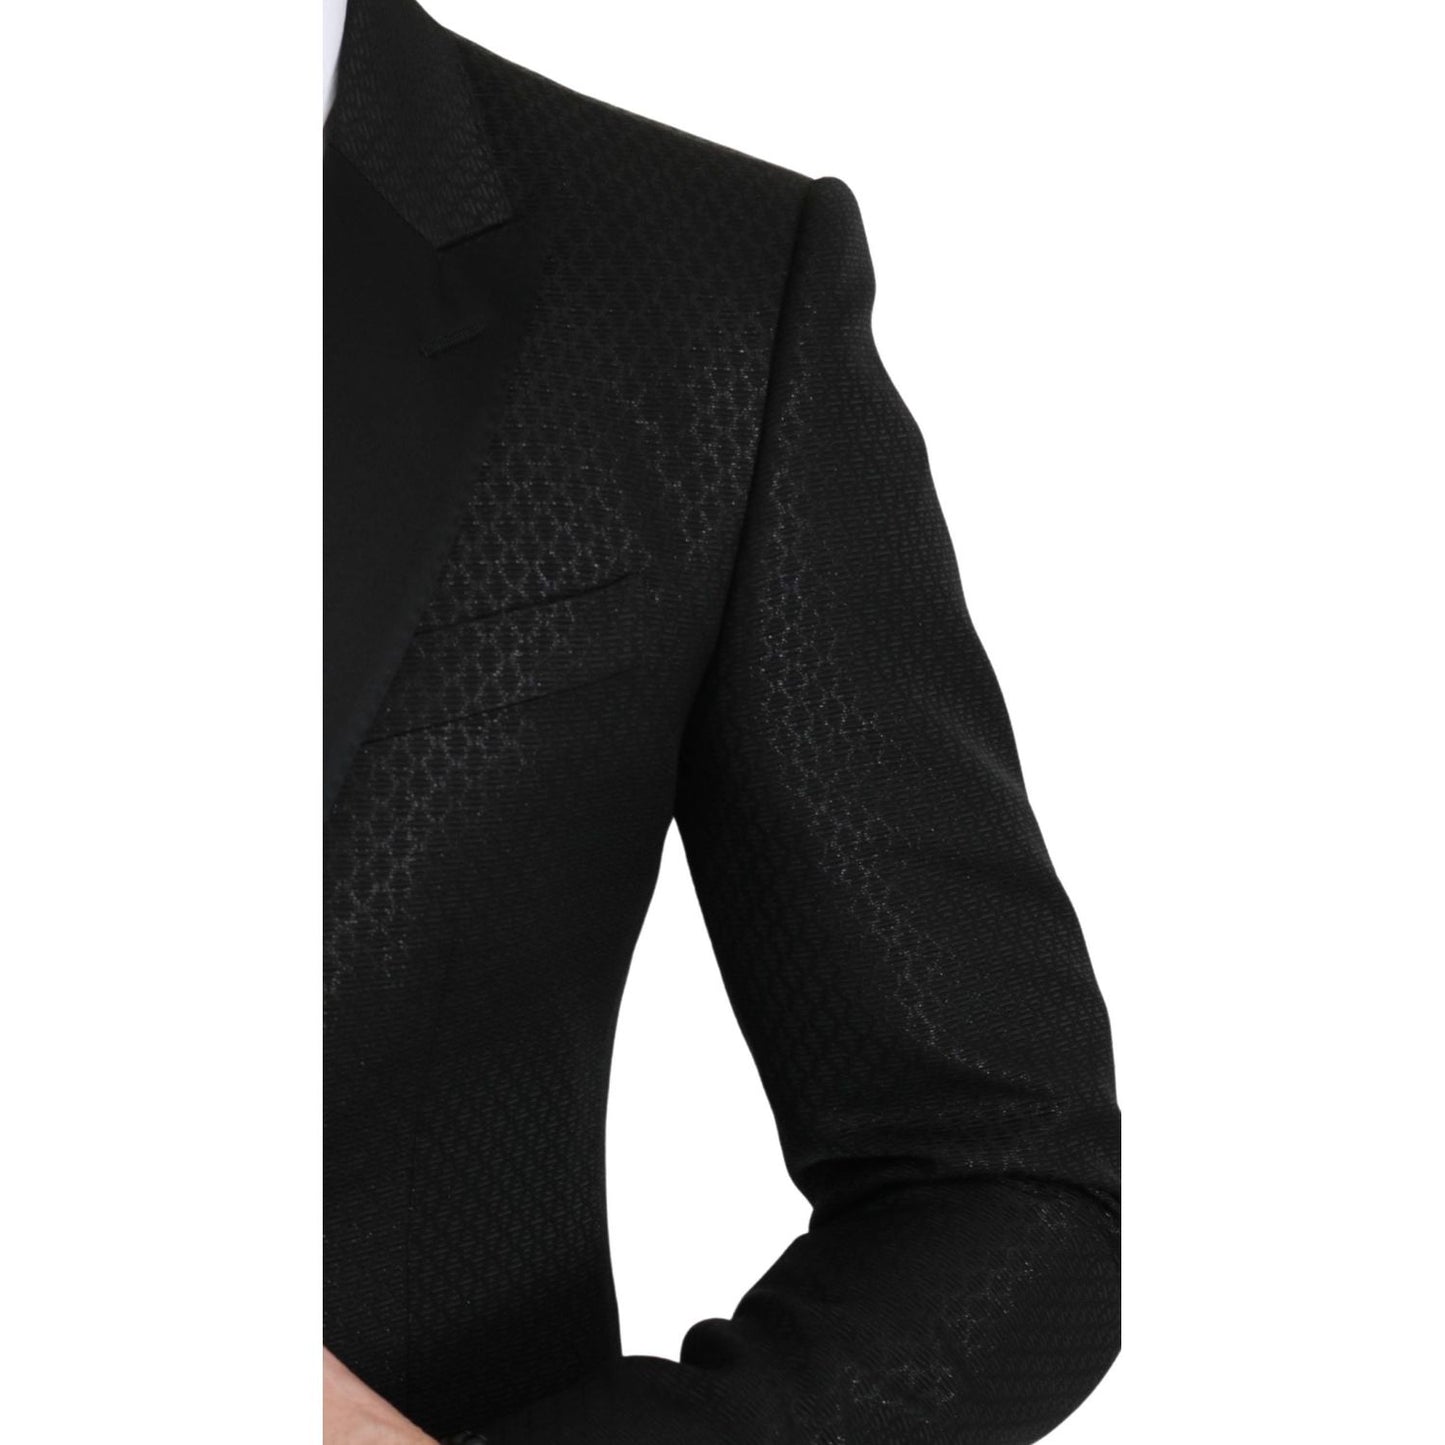 Dolce & Gabbana Slim Fit Martini Black Blazer Jacket black-slim-fit-jacket-martini-blazer Suit IMG_1017-scaled-4d85004d-fca.jpg